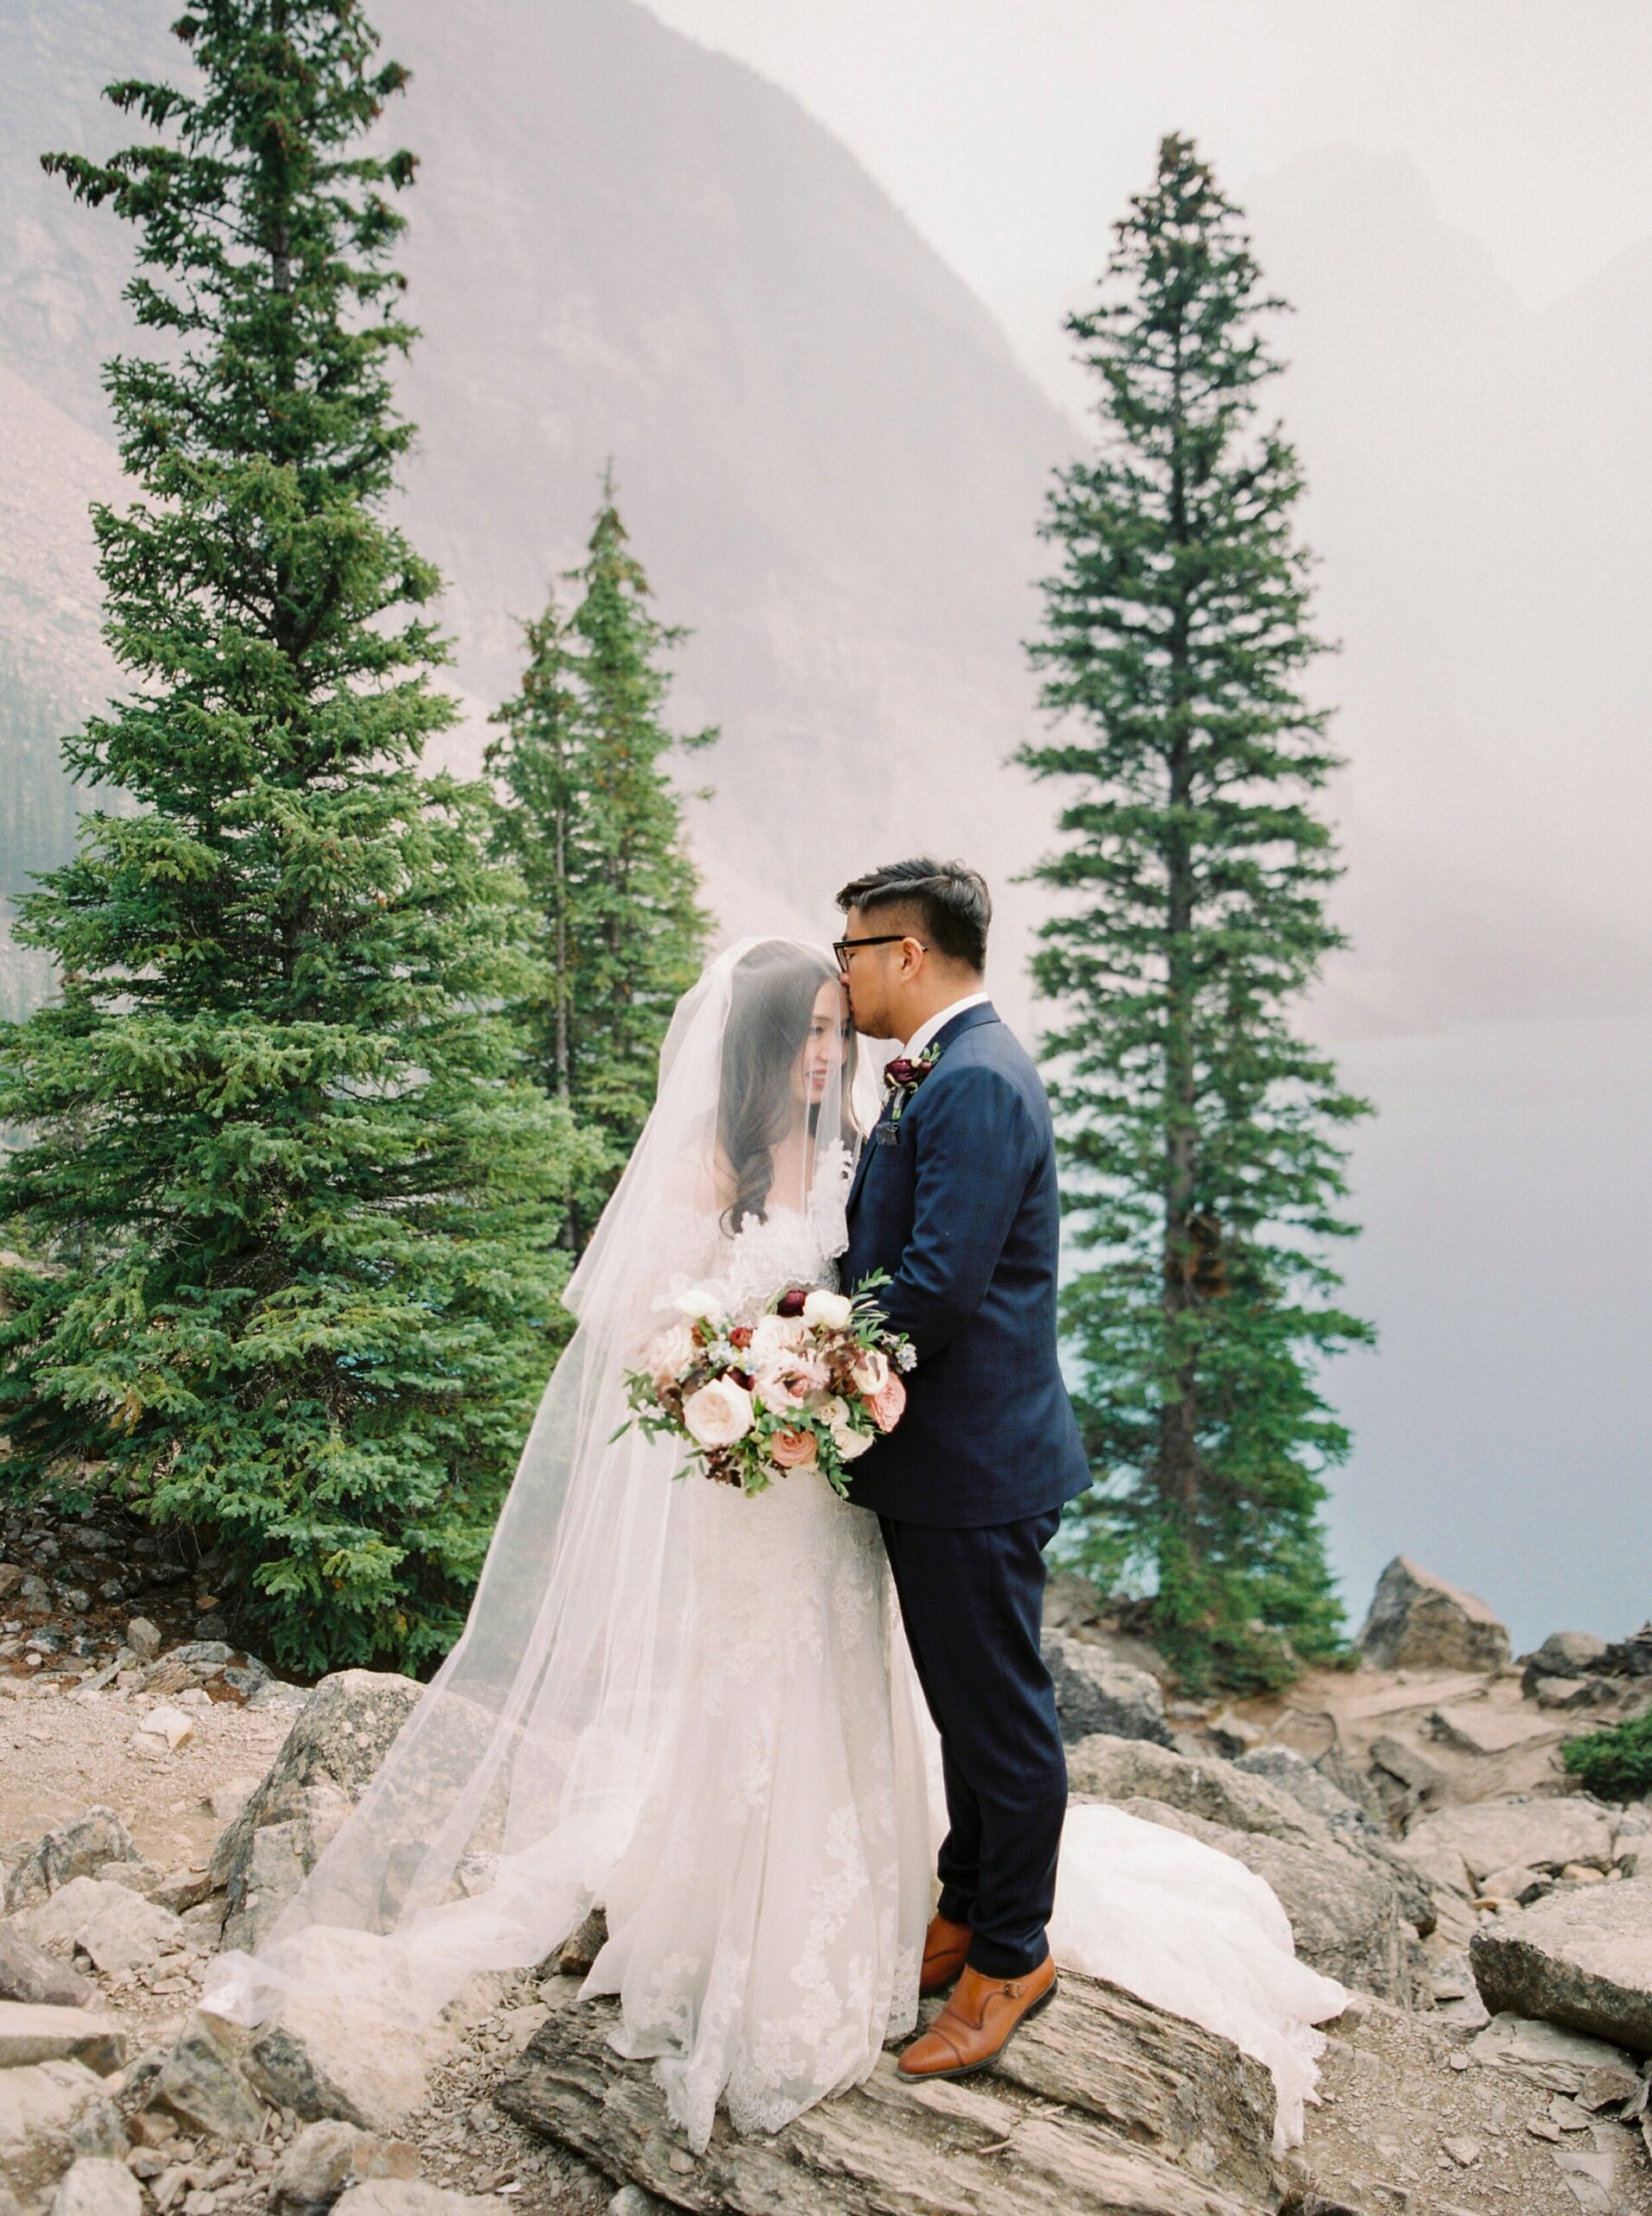  Lake Louise wedding photographers | Justine milton photography | fine art film destination wedding photographer | fairmont chateau lake louise bride and groom portrait 